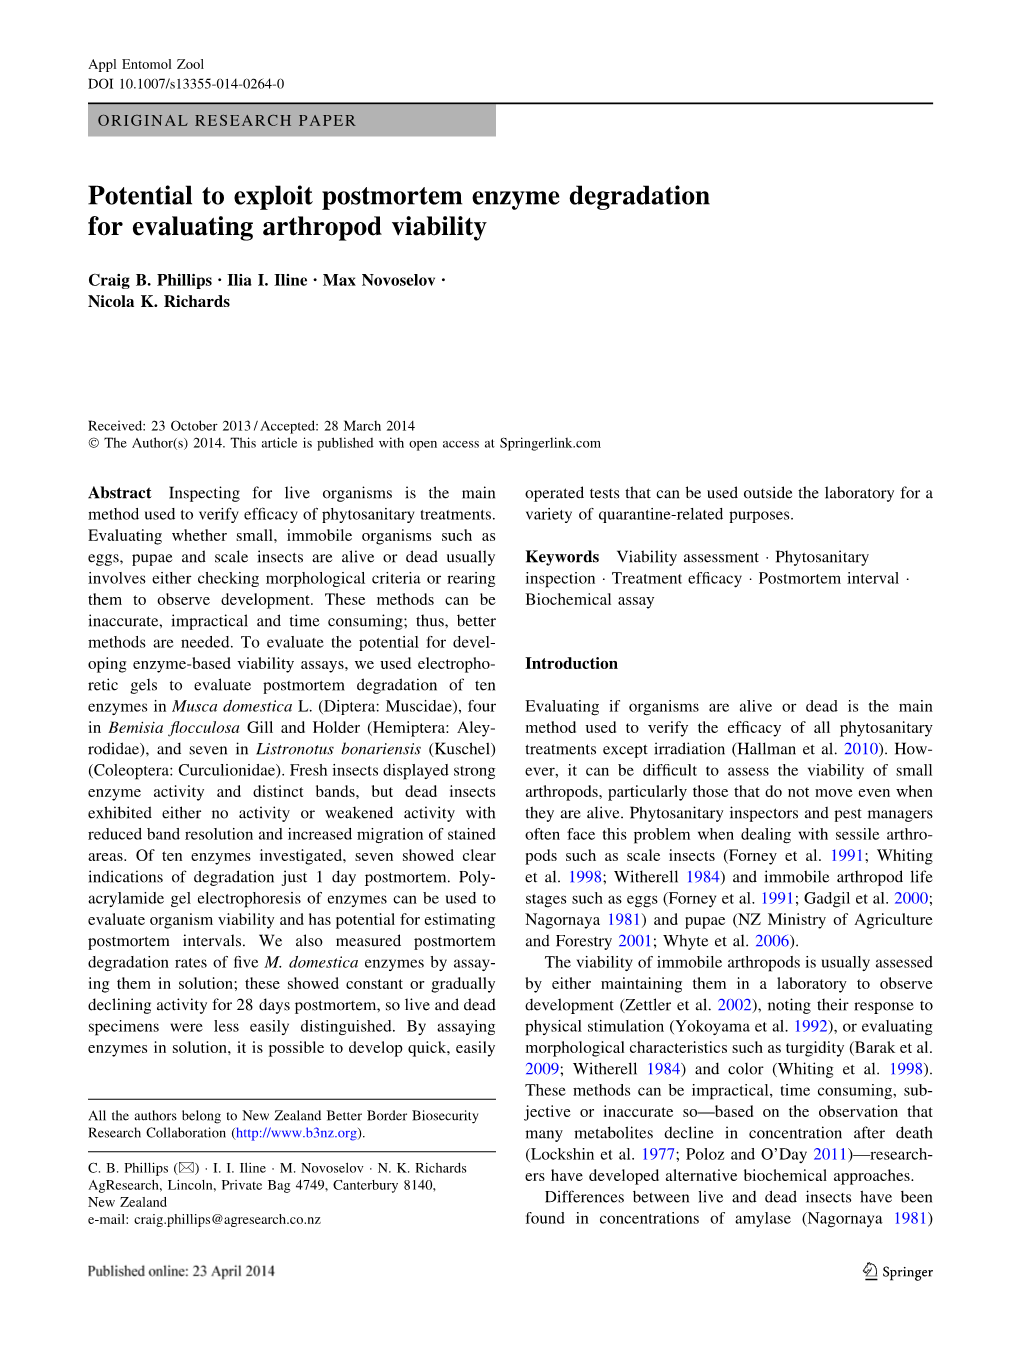 Potential to Exploit Postmortem Enzyme Degradation for Evaluating Arthropod Viability